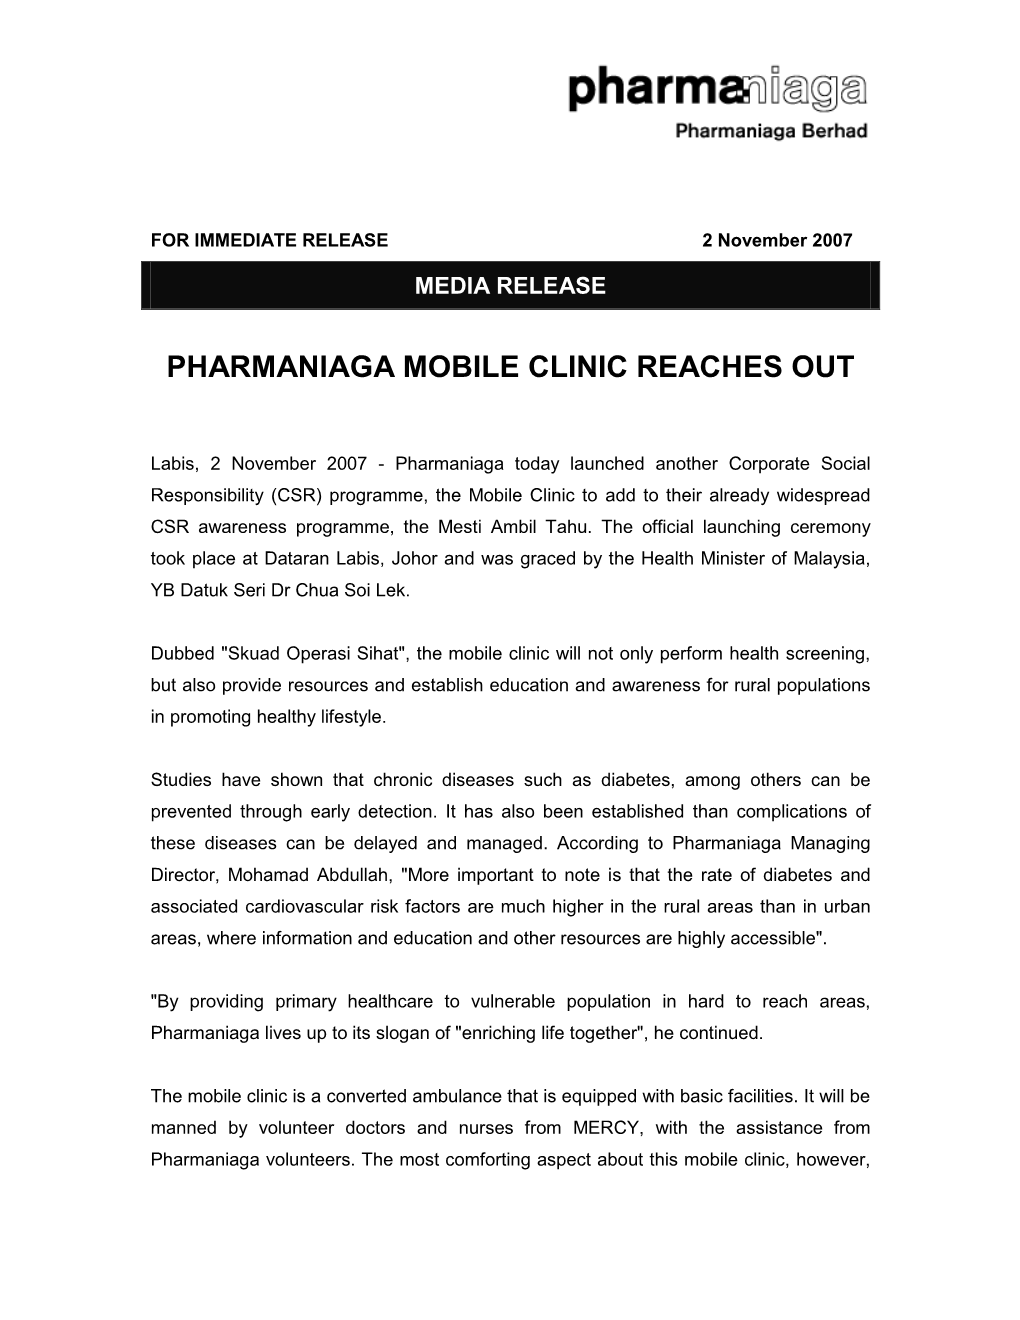 Pharmaniaga Mobile Clinic Reaches Out